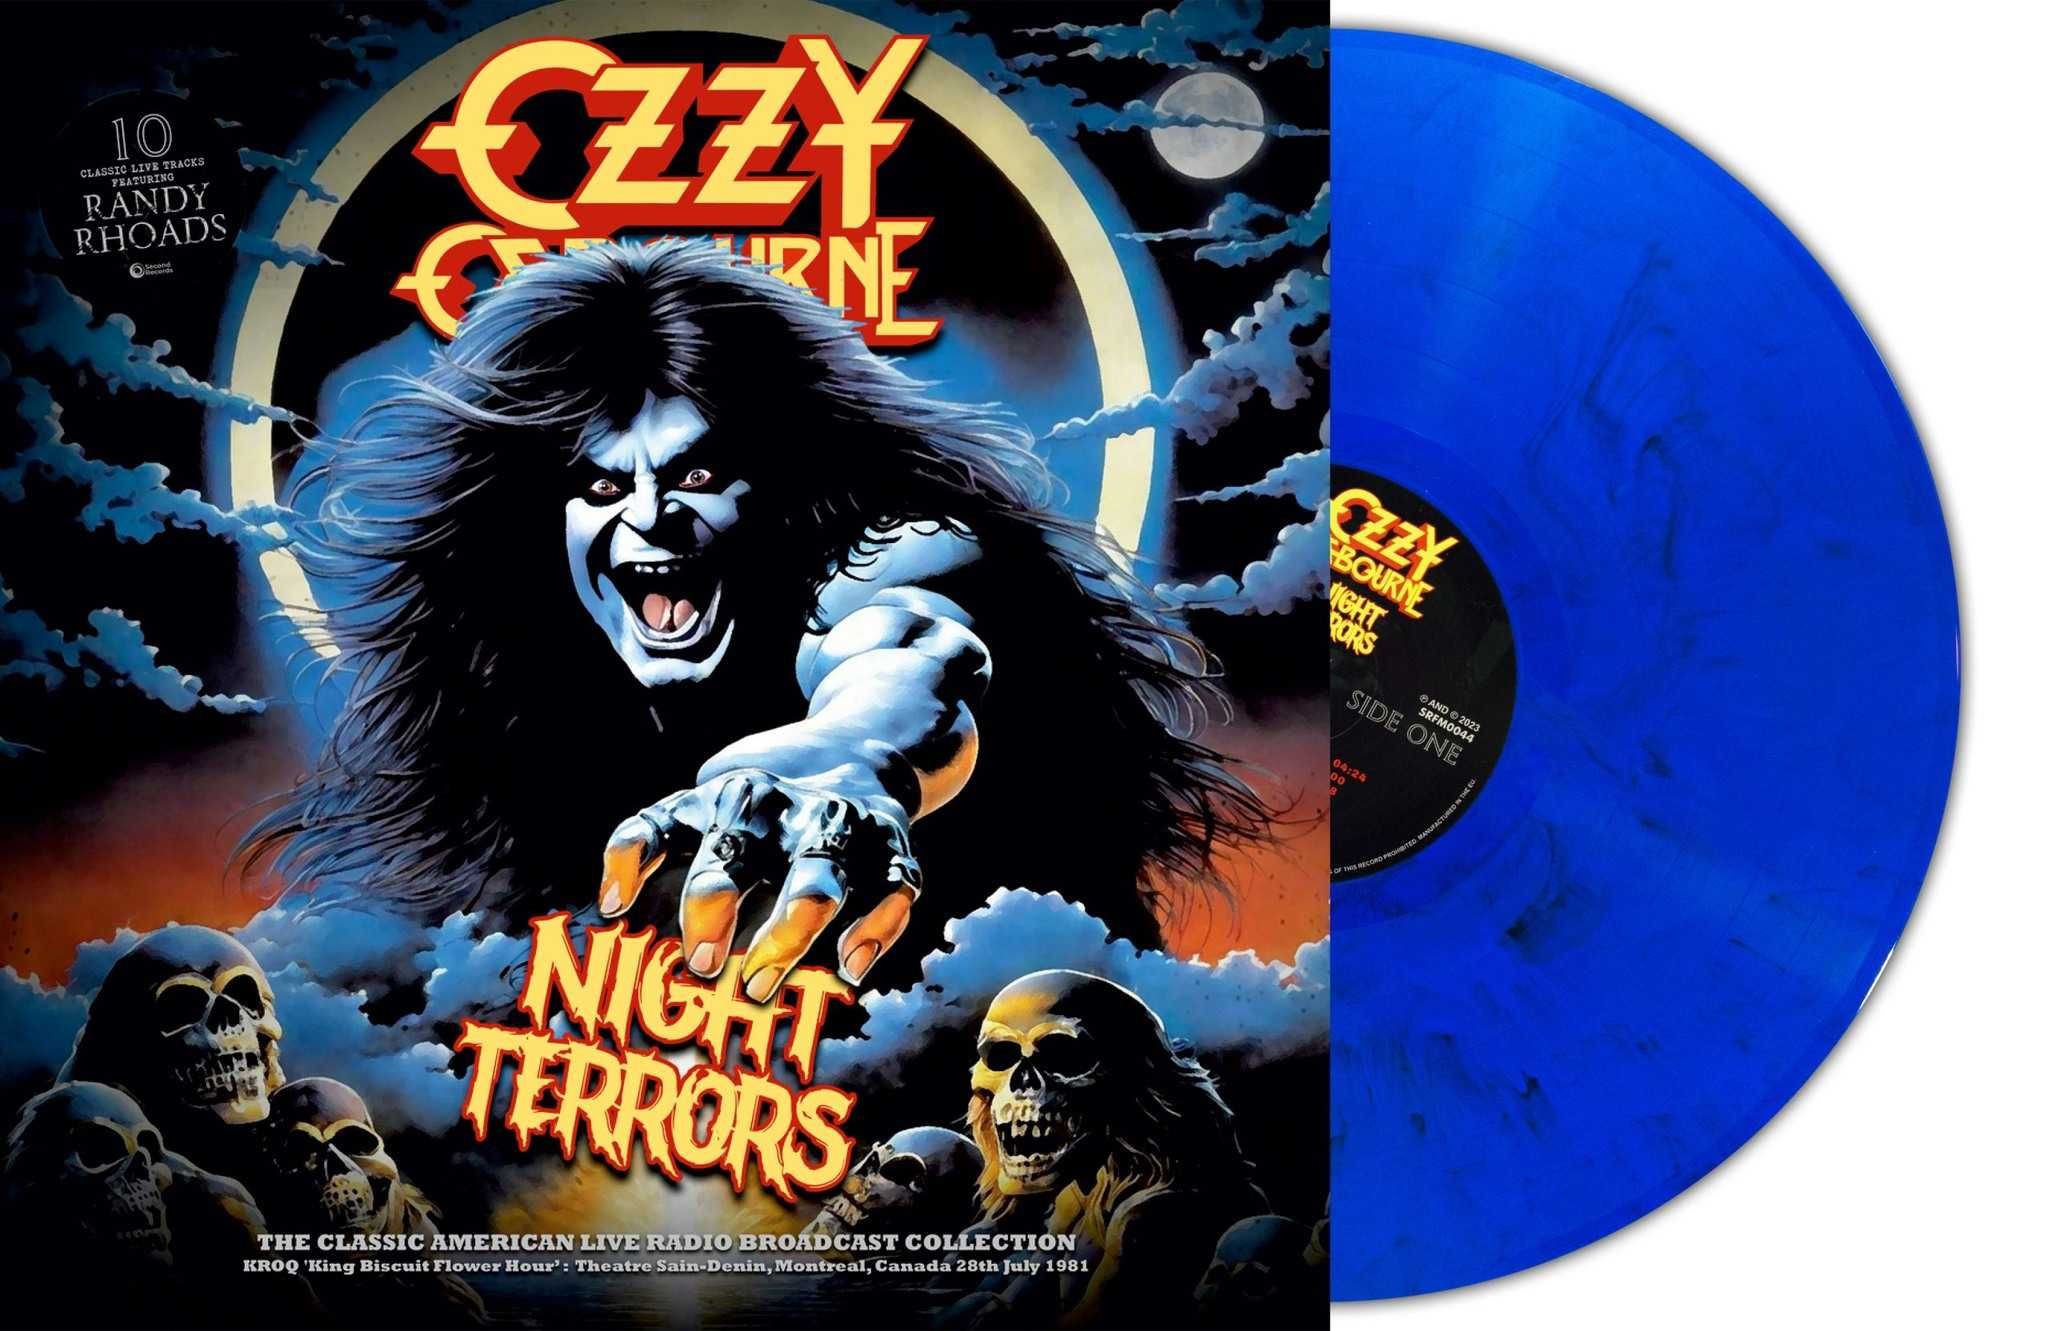 Ozzy Osbourne - Night terrors (BLUE MARBLE VINYL)